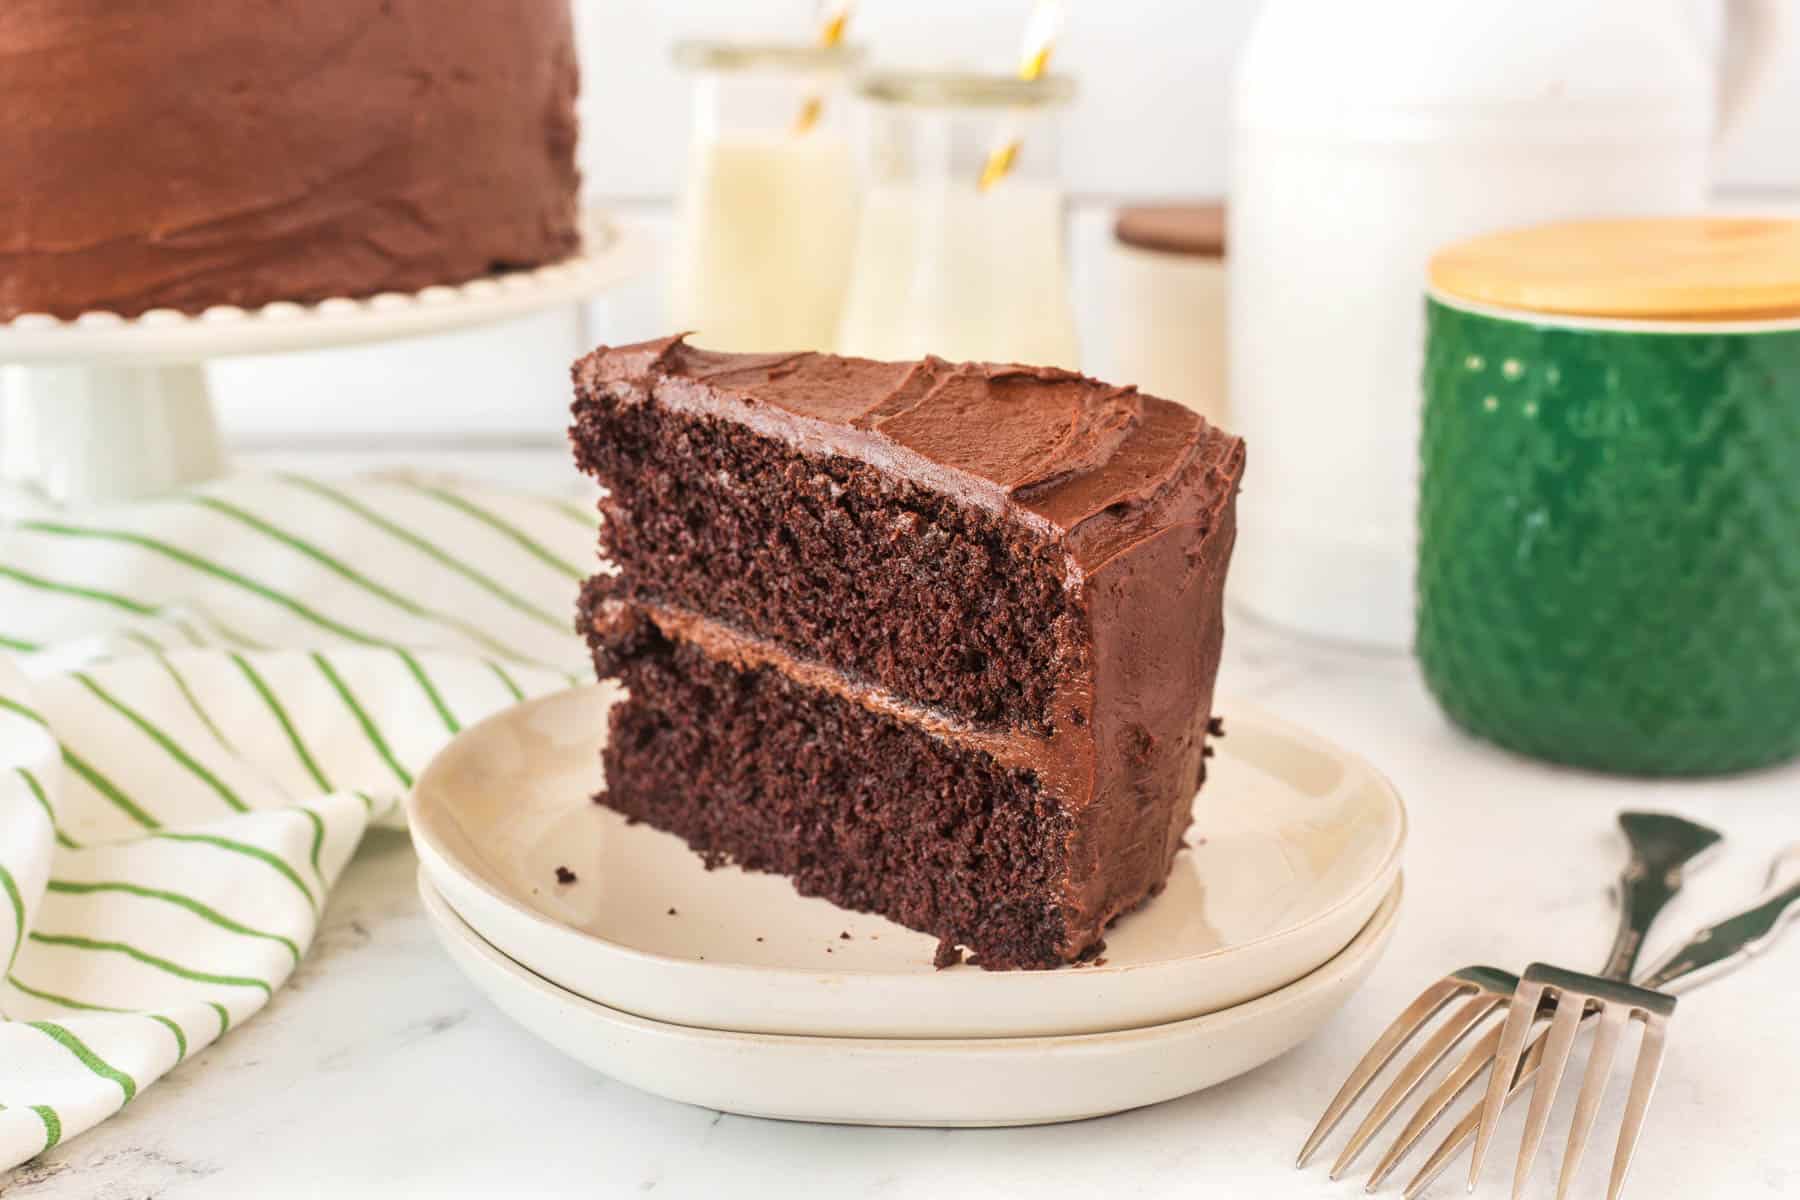 Slice of chocolate cake on a plate. 